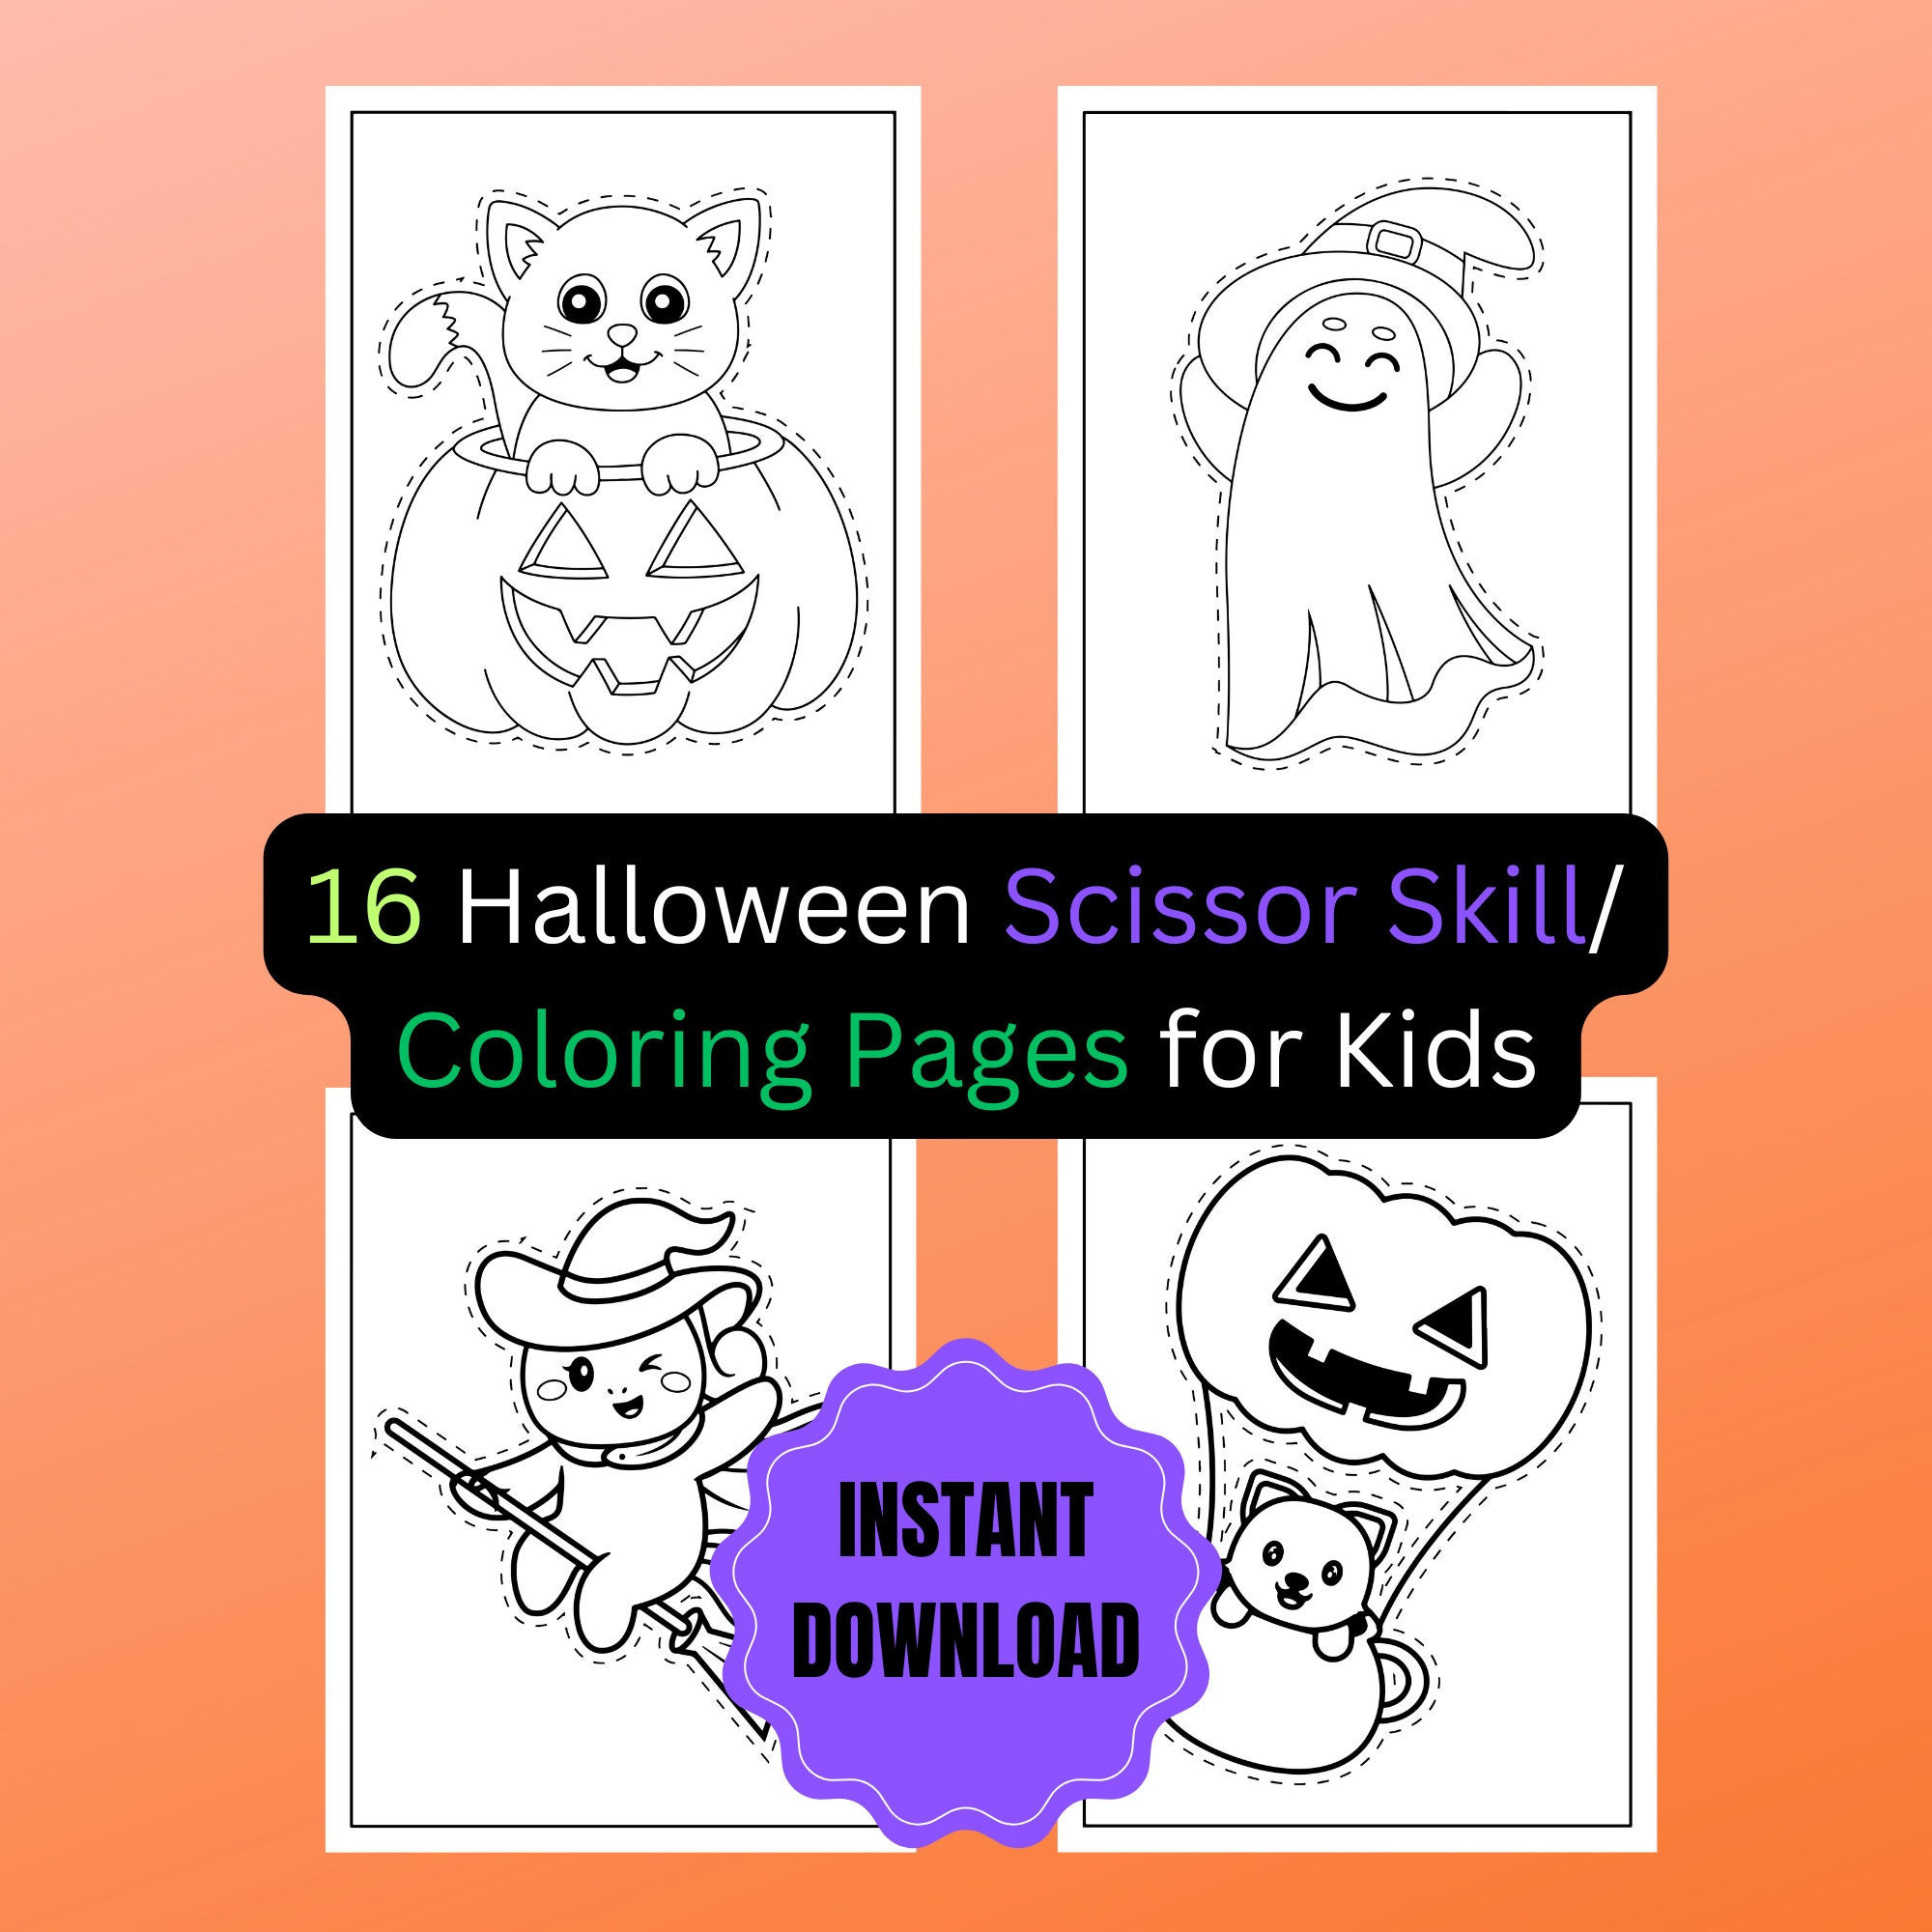 Halloween scissor skills and coloring pages for kids printable halloween activities halloween sheets instant download